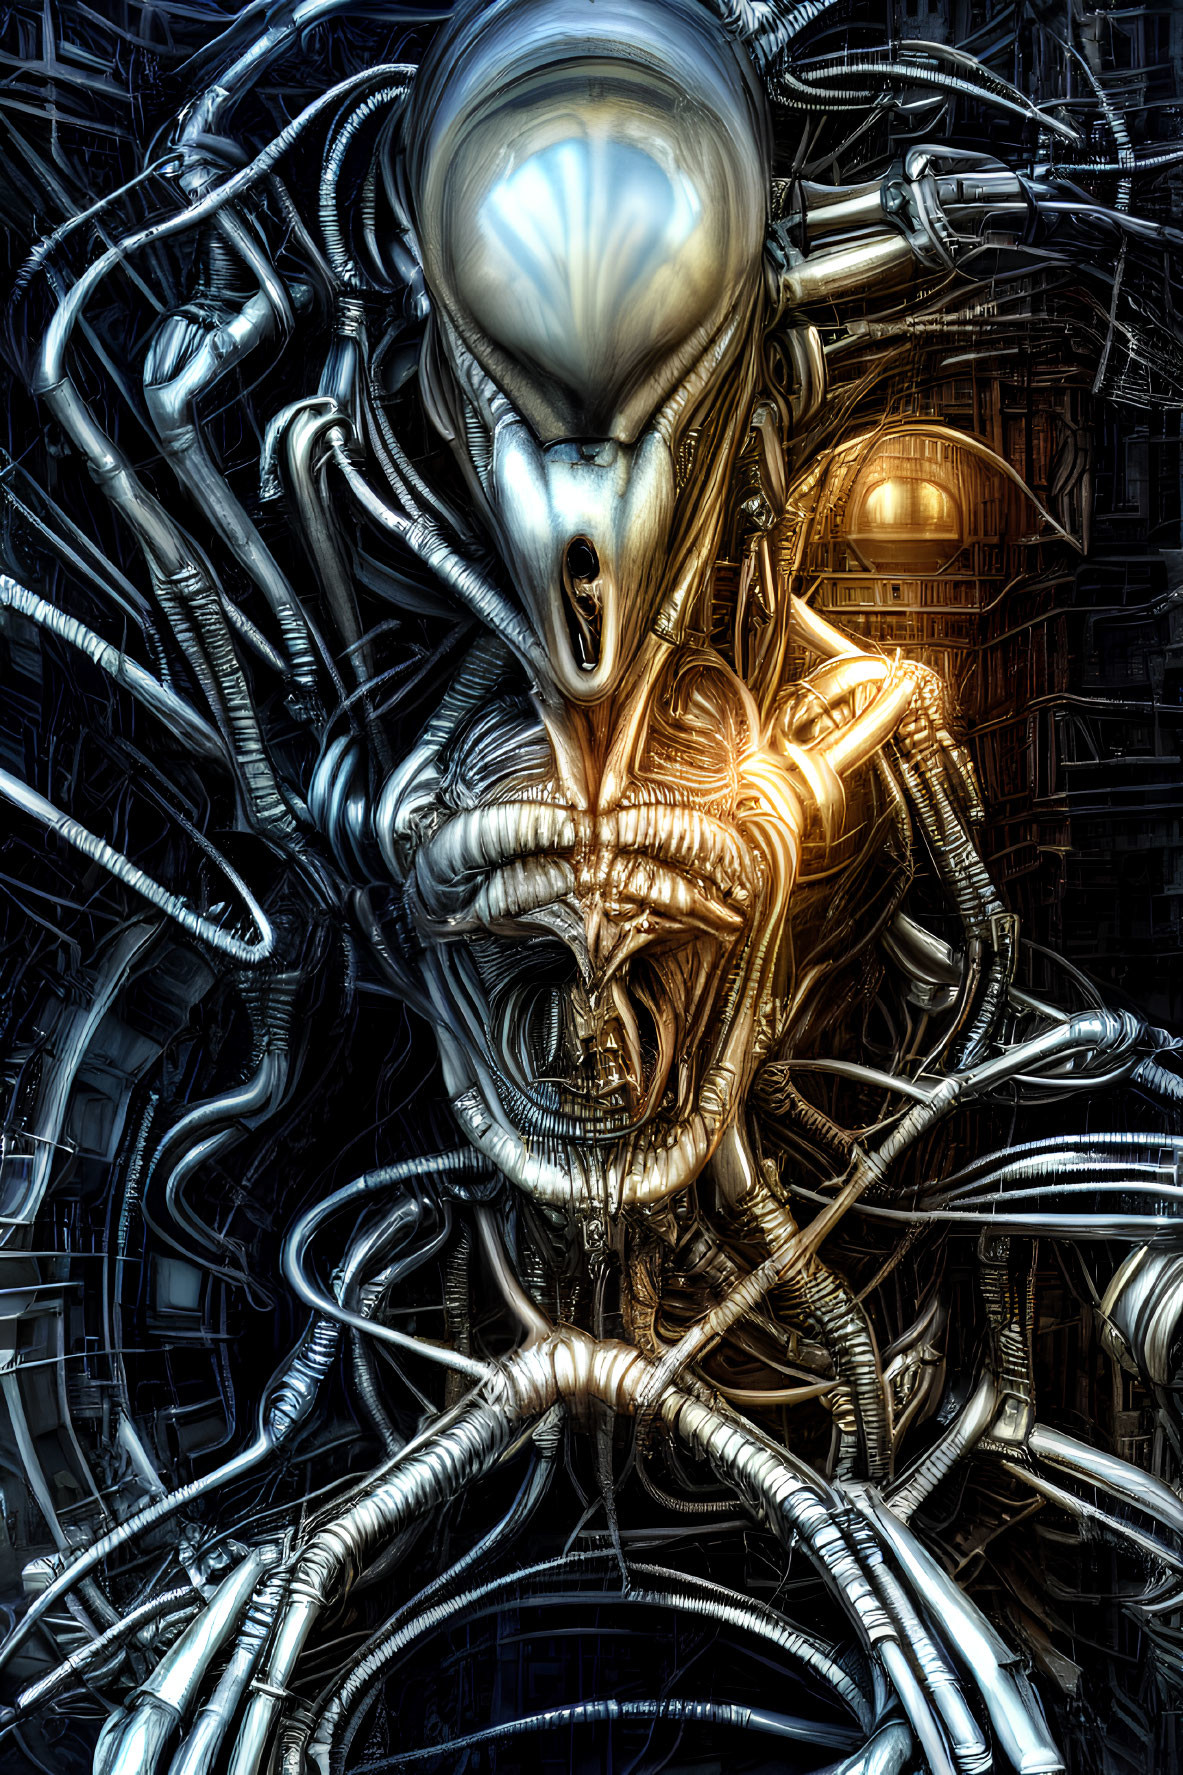 Detailed artwork: Alien with glossy exoskeleton in mechanical backdrop